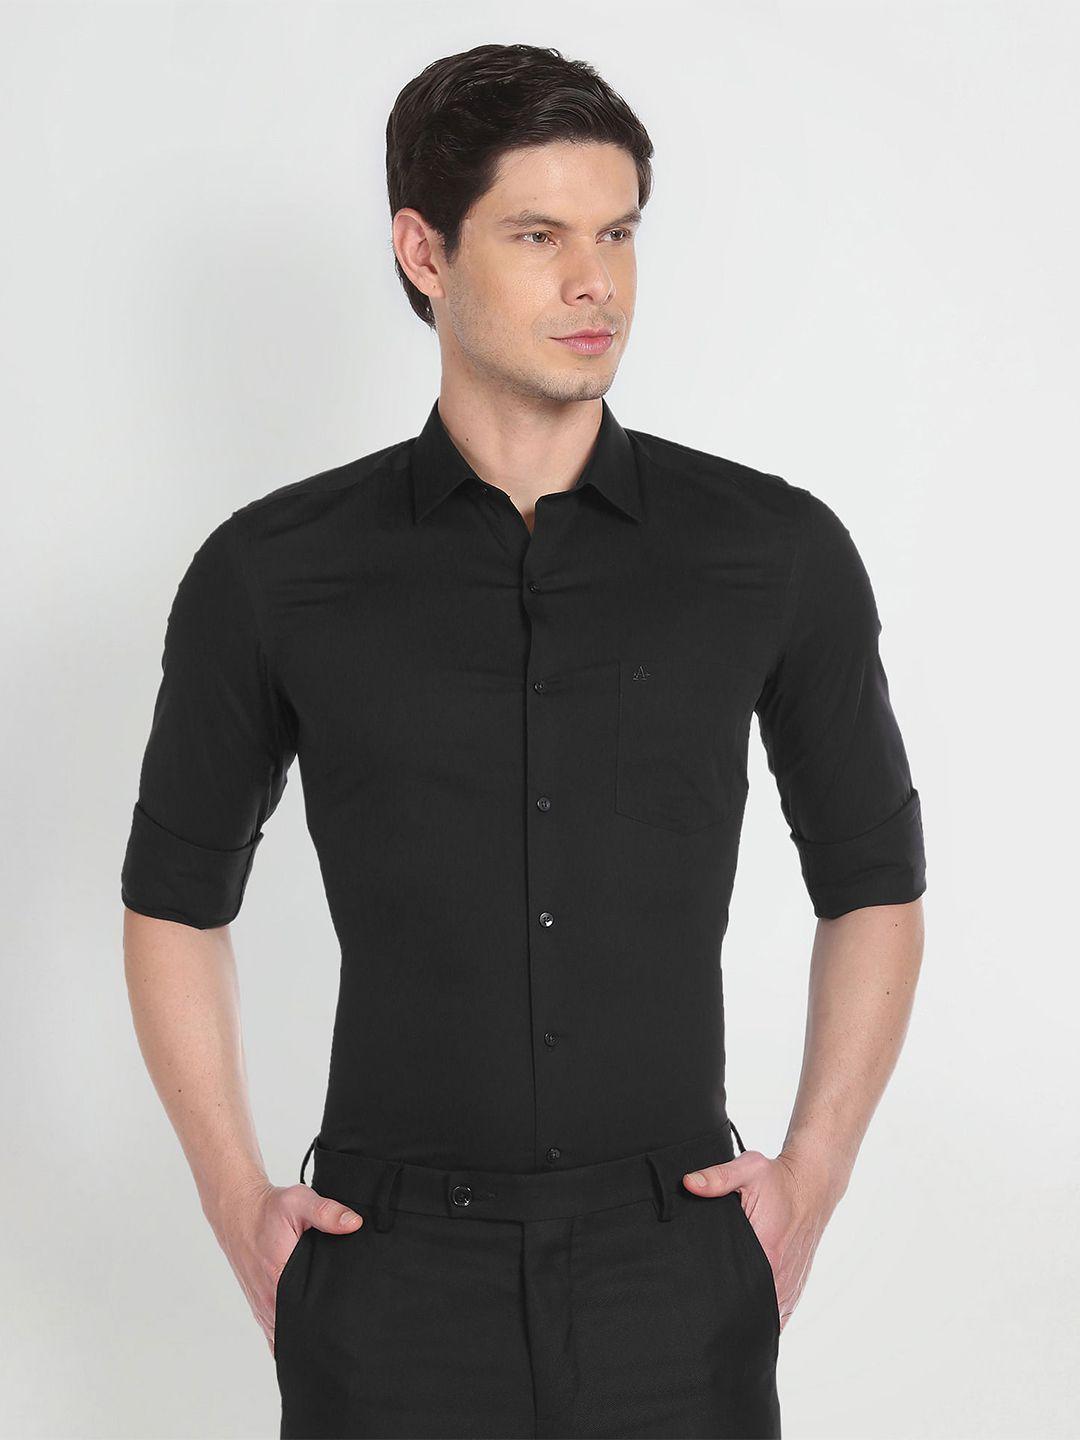 arrow spread collar slim fit twill pure cotton formal shirt